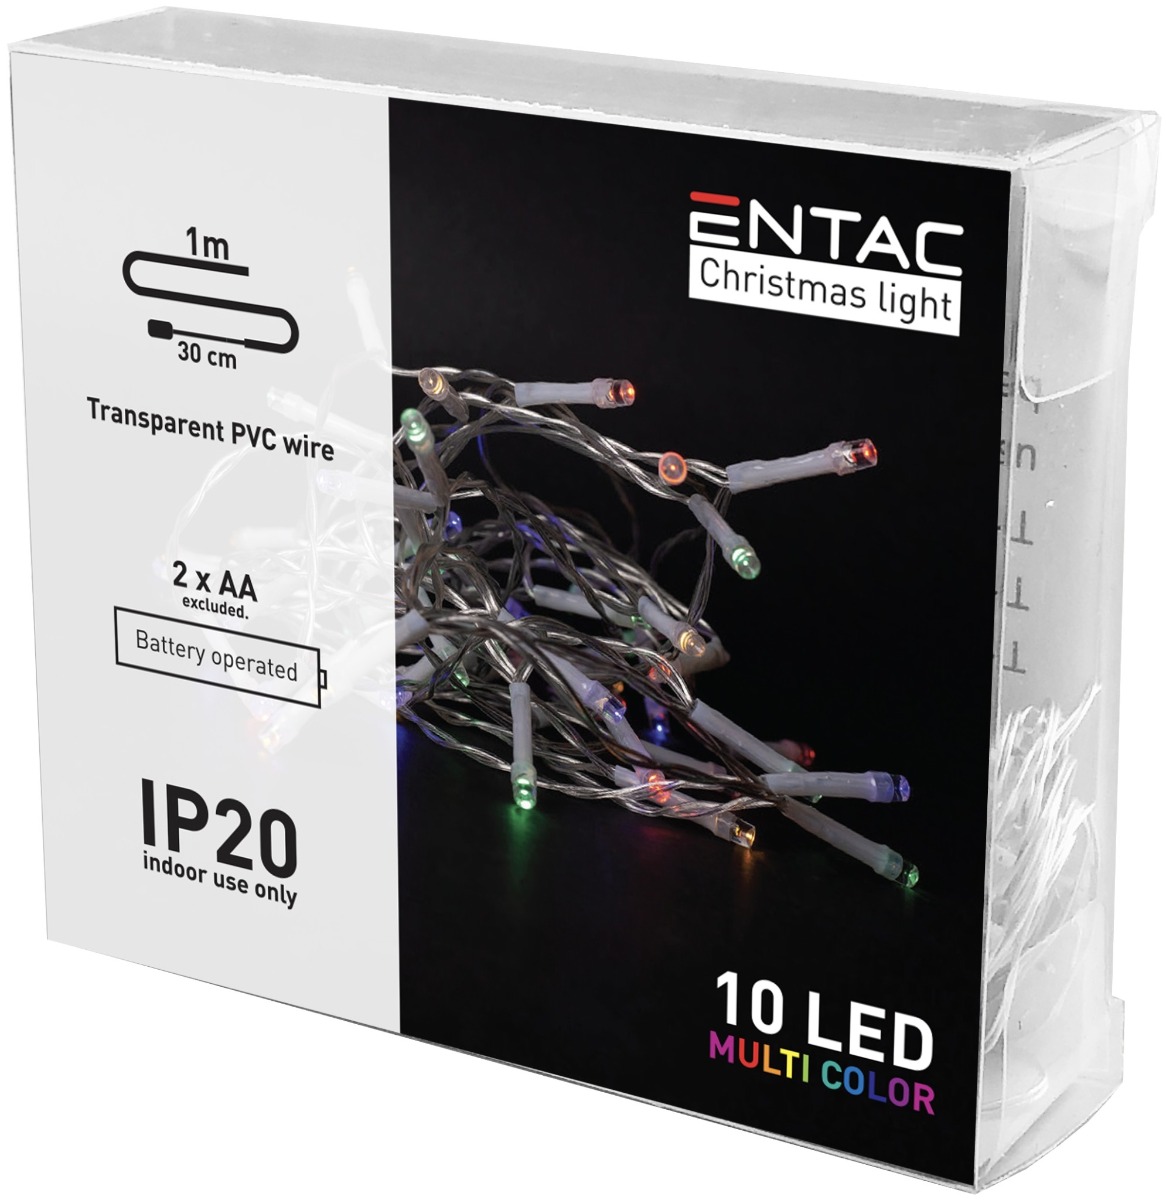 Entac Χριστουγεννιάτικα Εσωτερικά 10 LED Πολύχρωμα 1μ (2xAA Δεν περιλαμβ.)